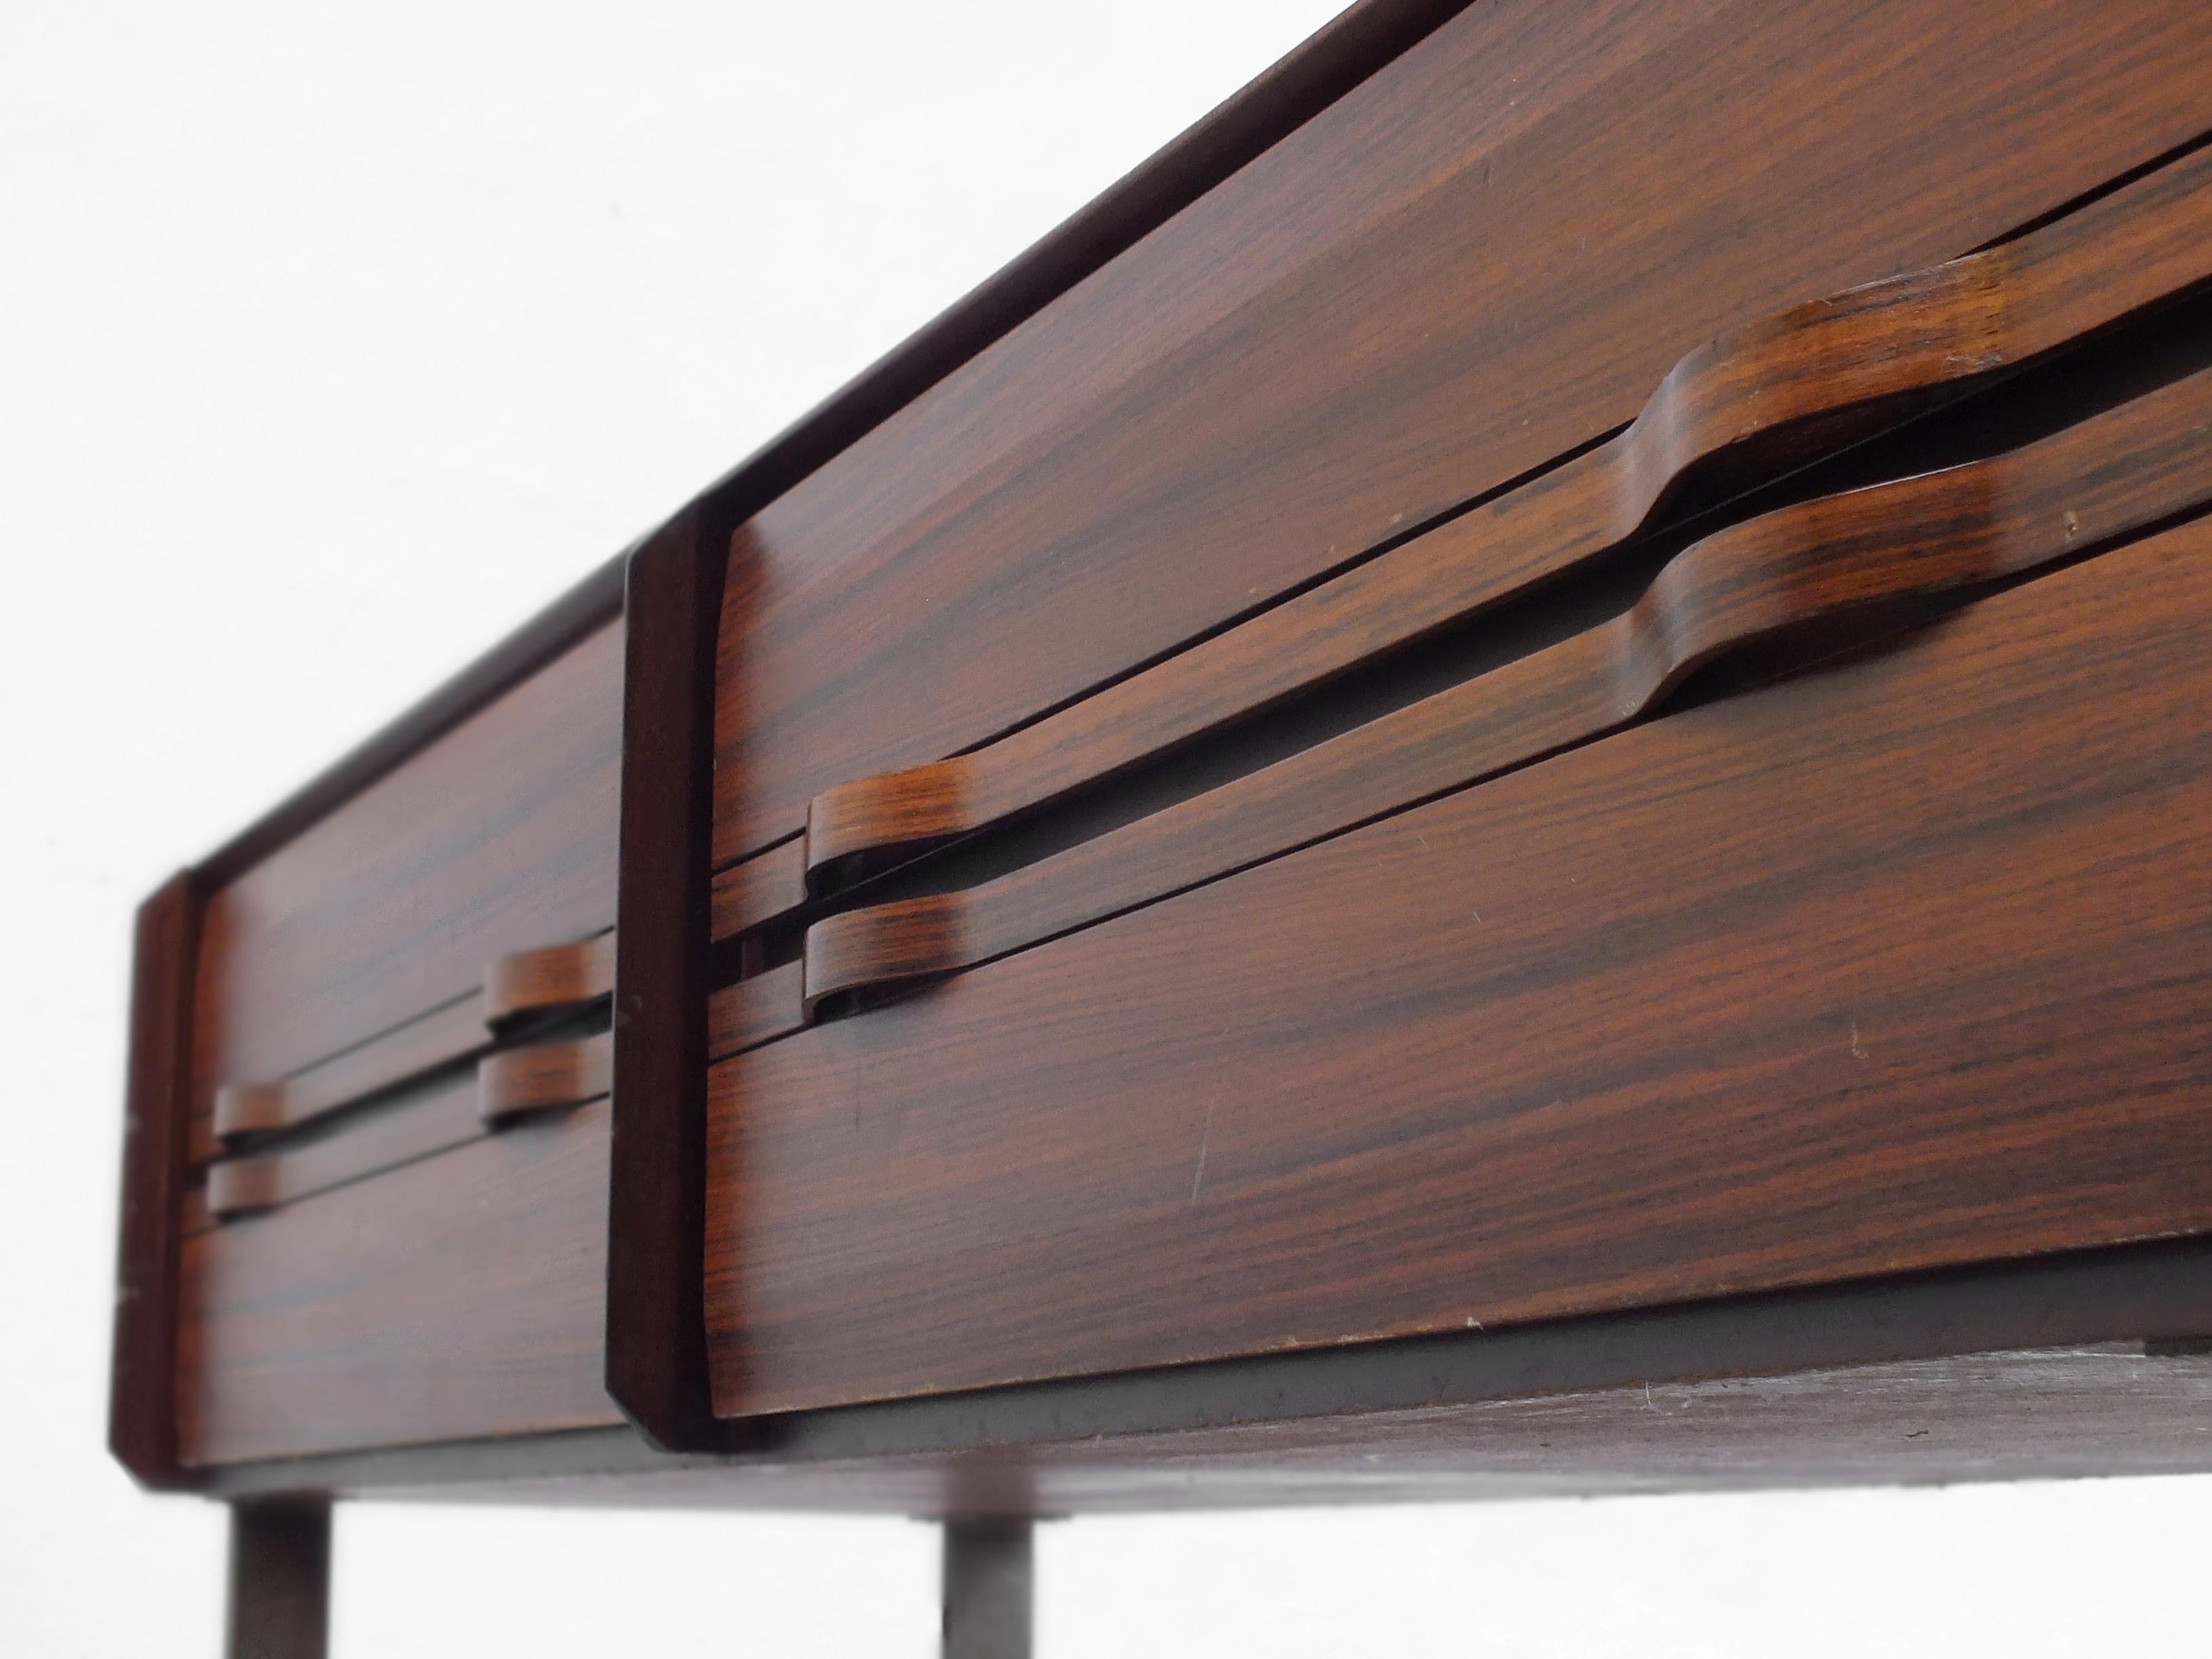 La Permanente meuble Cantu' Italy minimalist sideboard probable Frattini design  For Sale 1